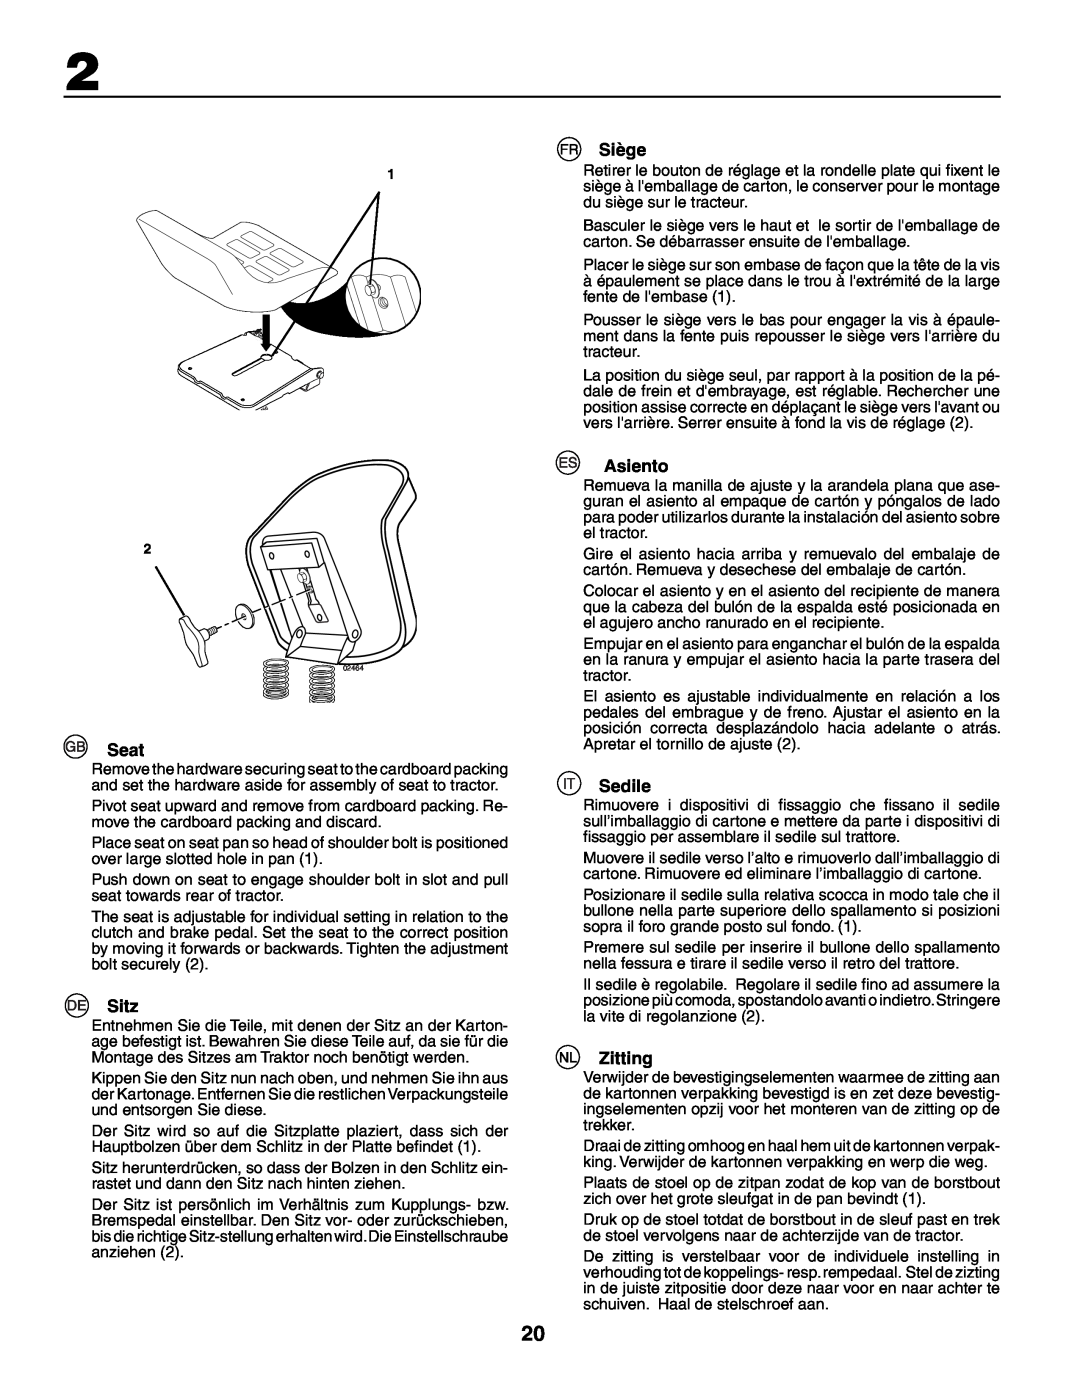 Husqvarna YTH210XP instruction manual Seat, Sitz, Siège, Asiento, Sedile, Zitting 